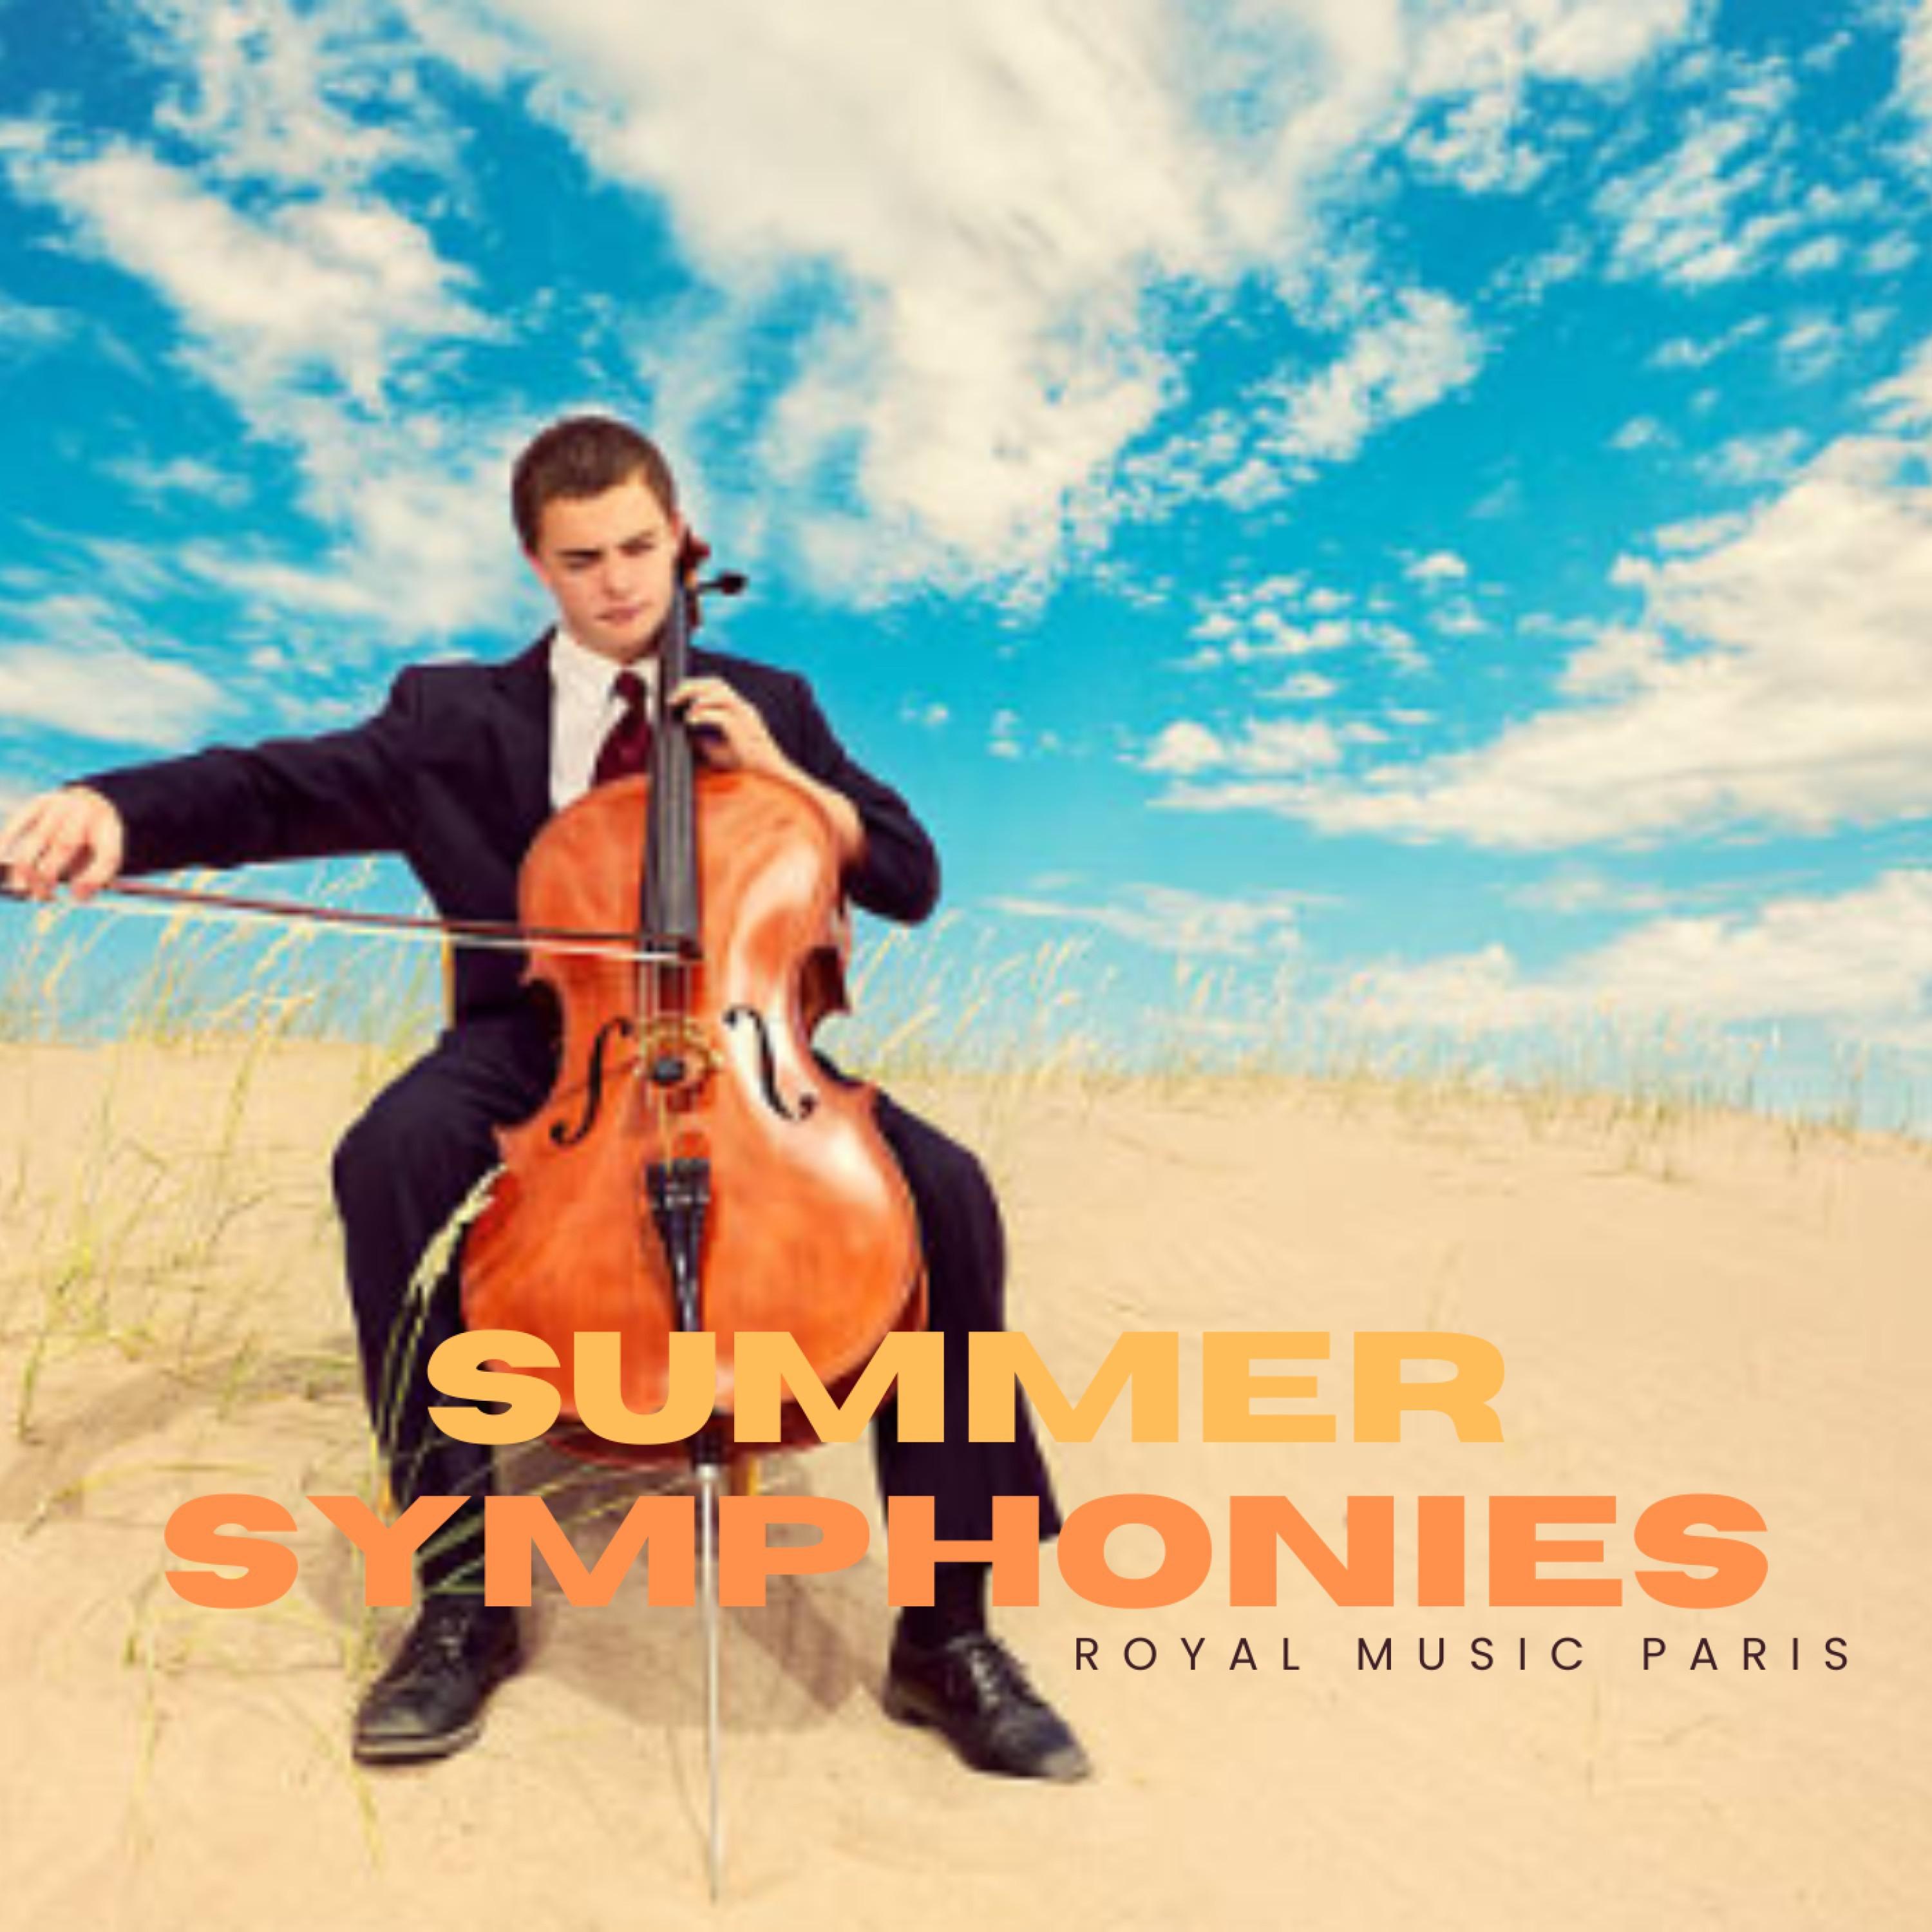 Royal Music Paris - Summer Symphonies (Extended Mix)